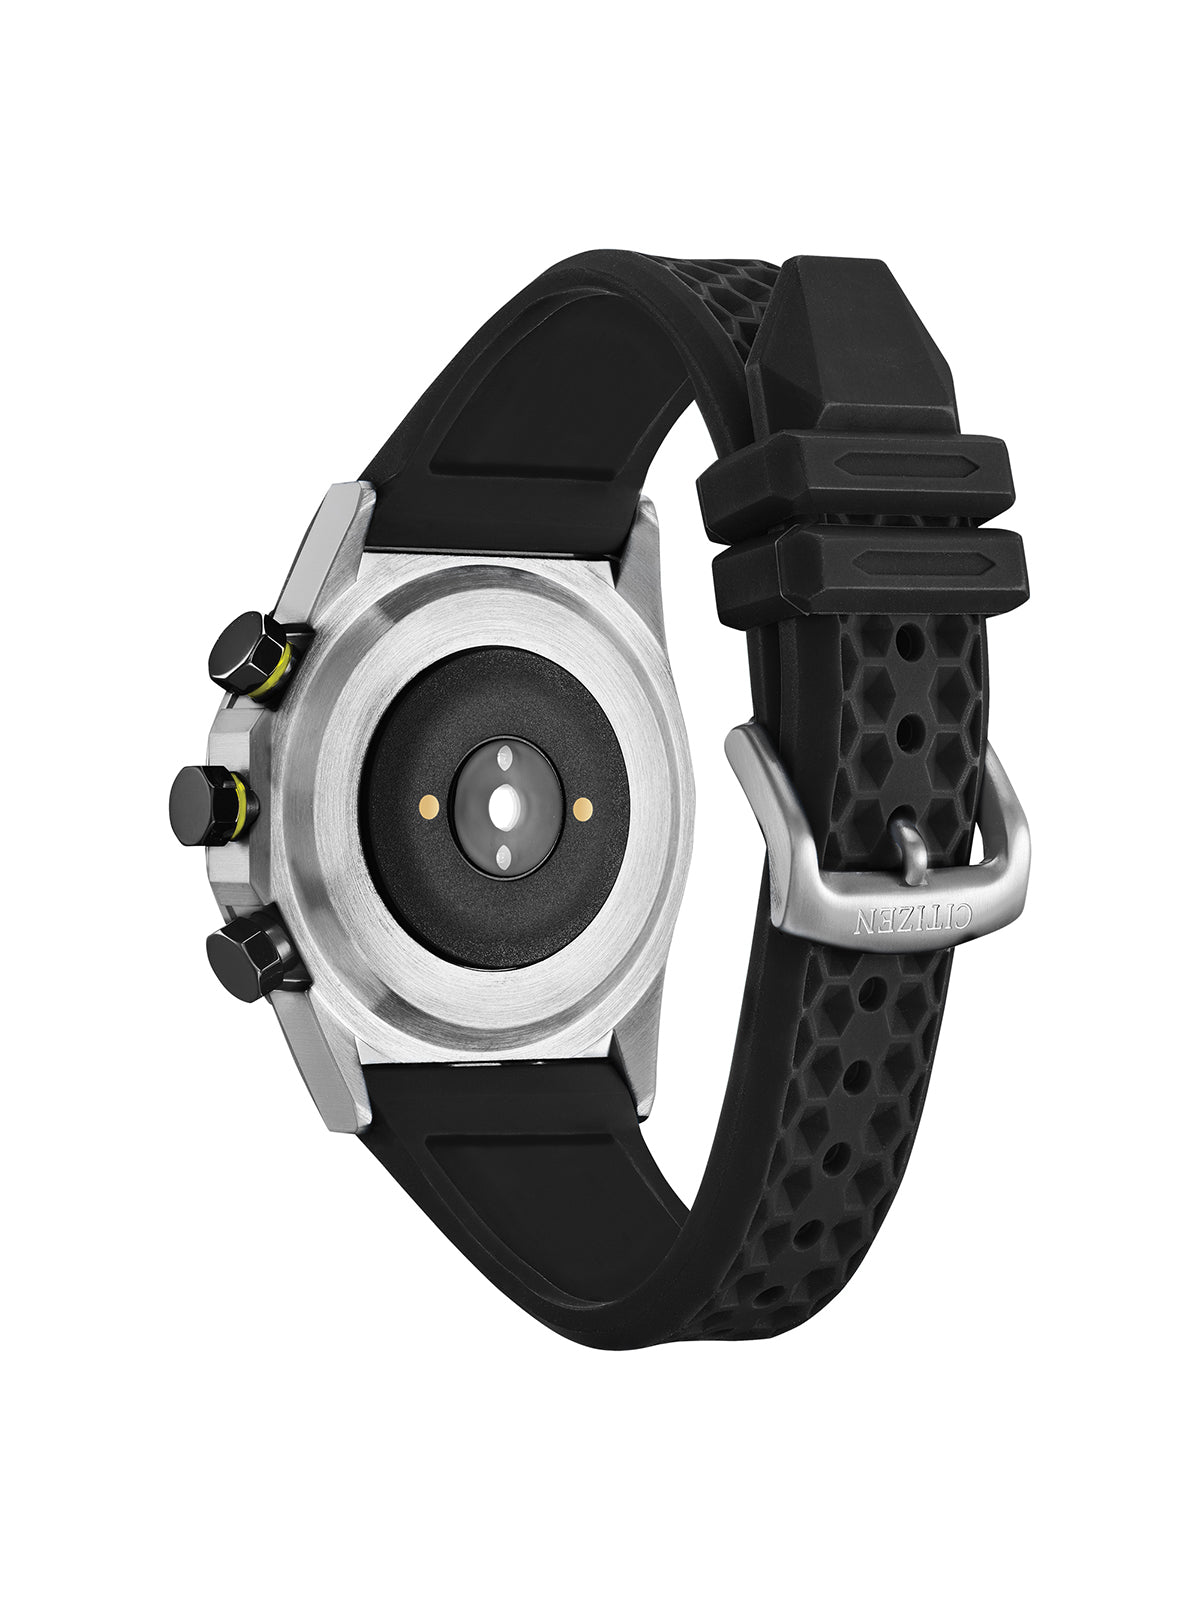 SALE Citizen CZ Smart Hybrid Watch 44mm JX1000-03E *Ex-Display*